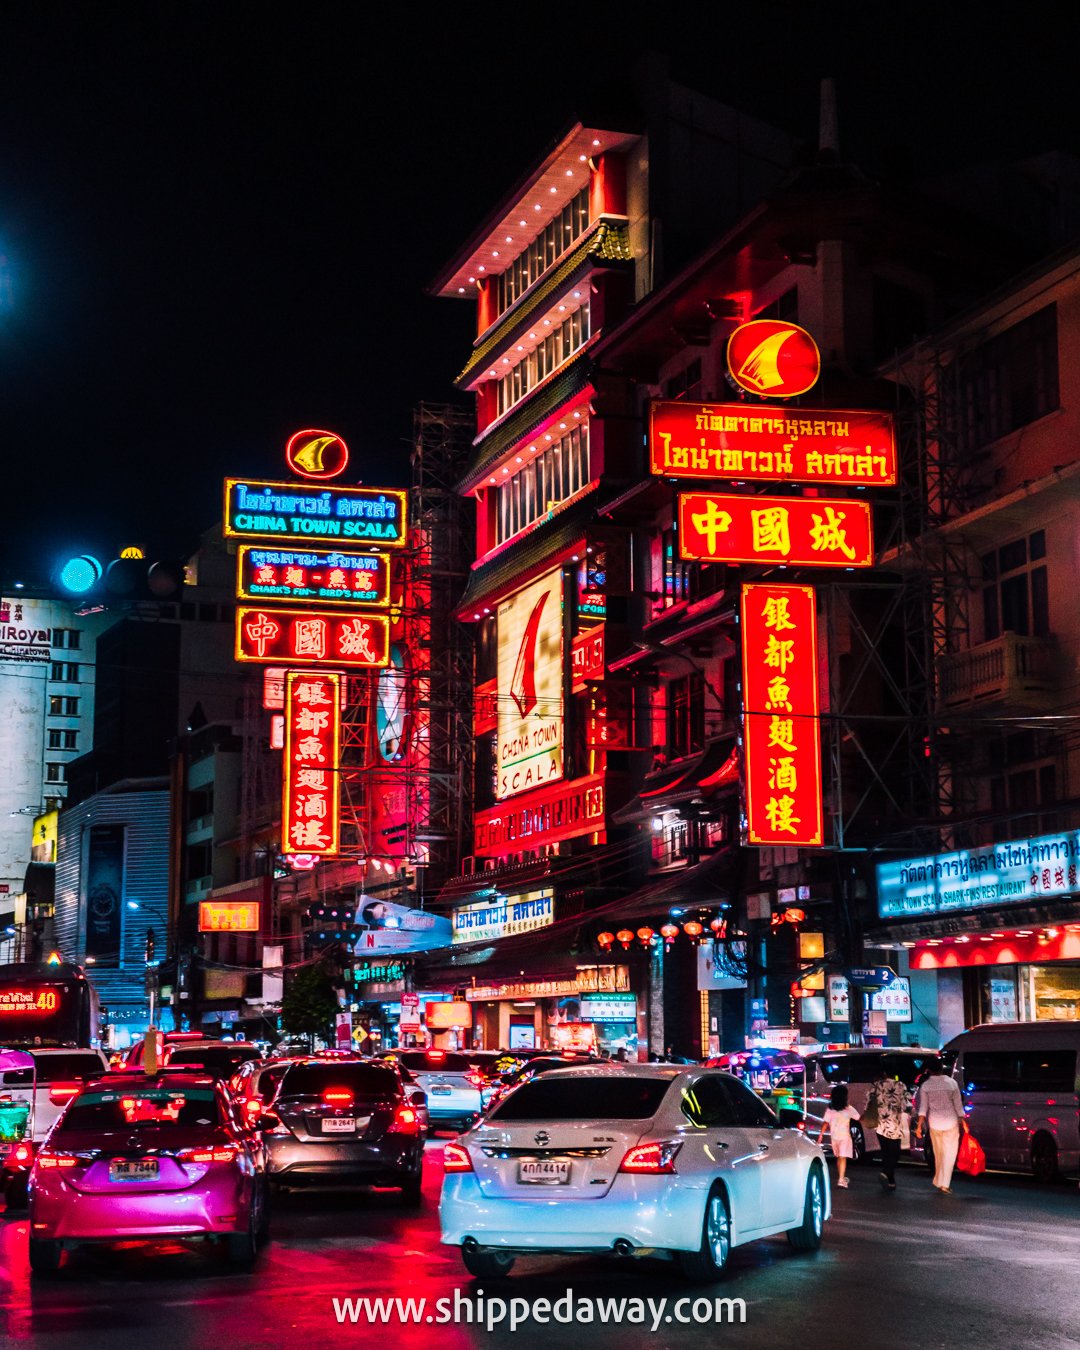 Streets of Bangkok Chinatown at night with neon lights and signs, Thailand, Yaowarat Road Bangkok chinatown, Chinatown Bangkok Travel Guide